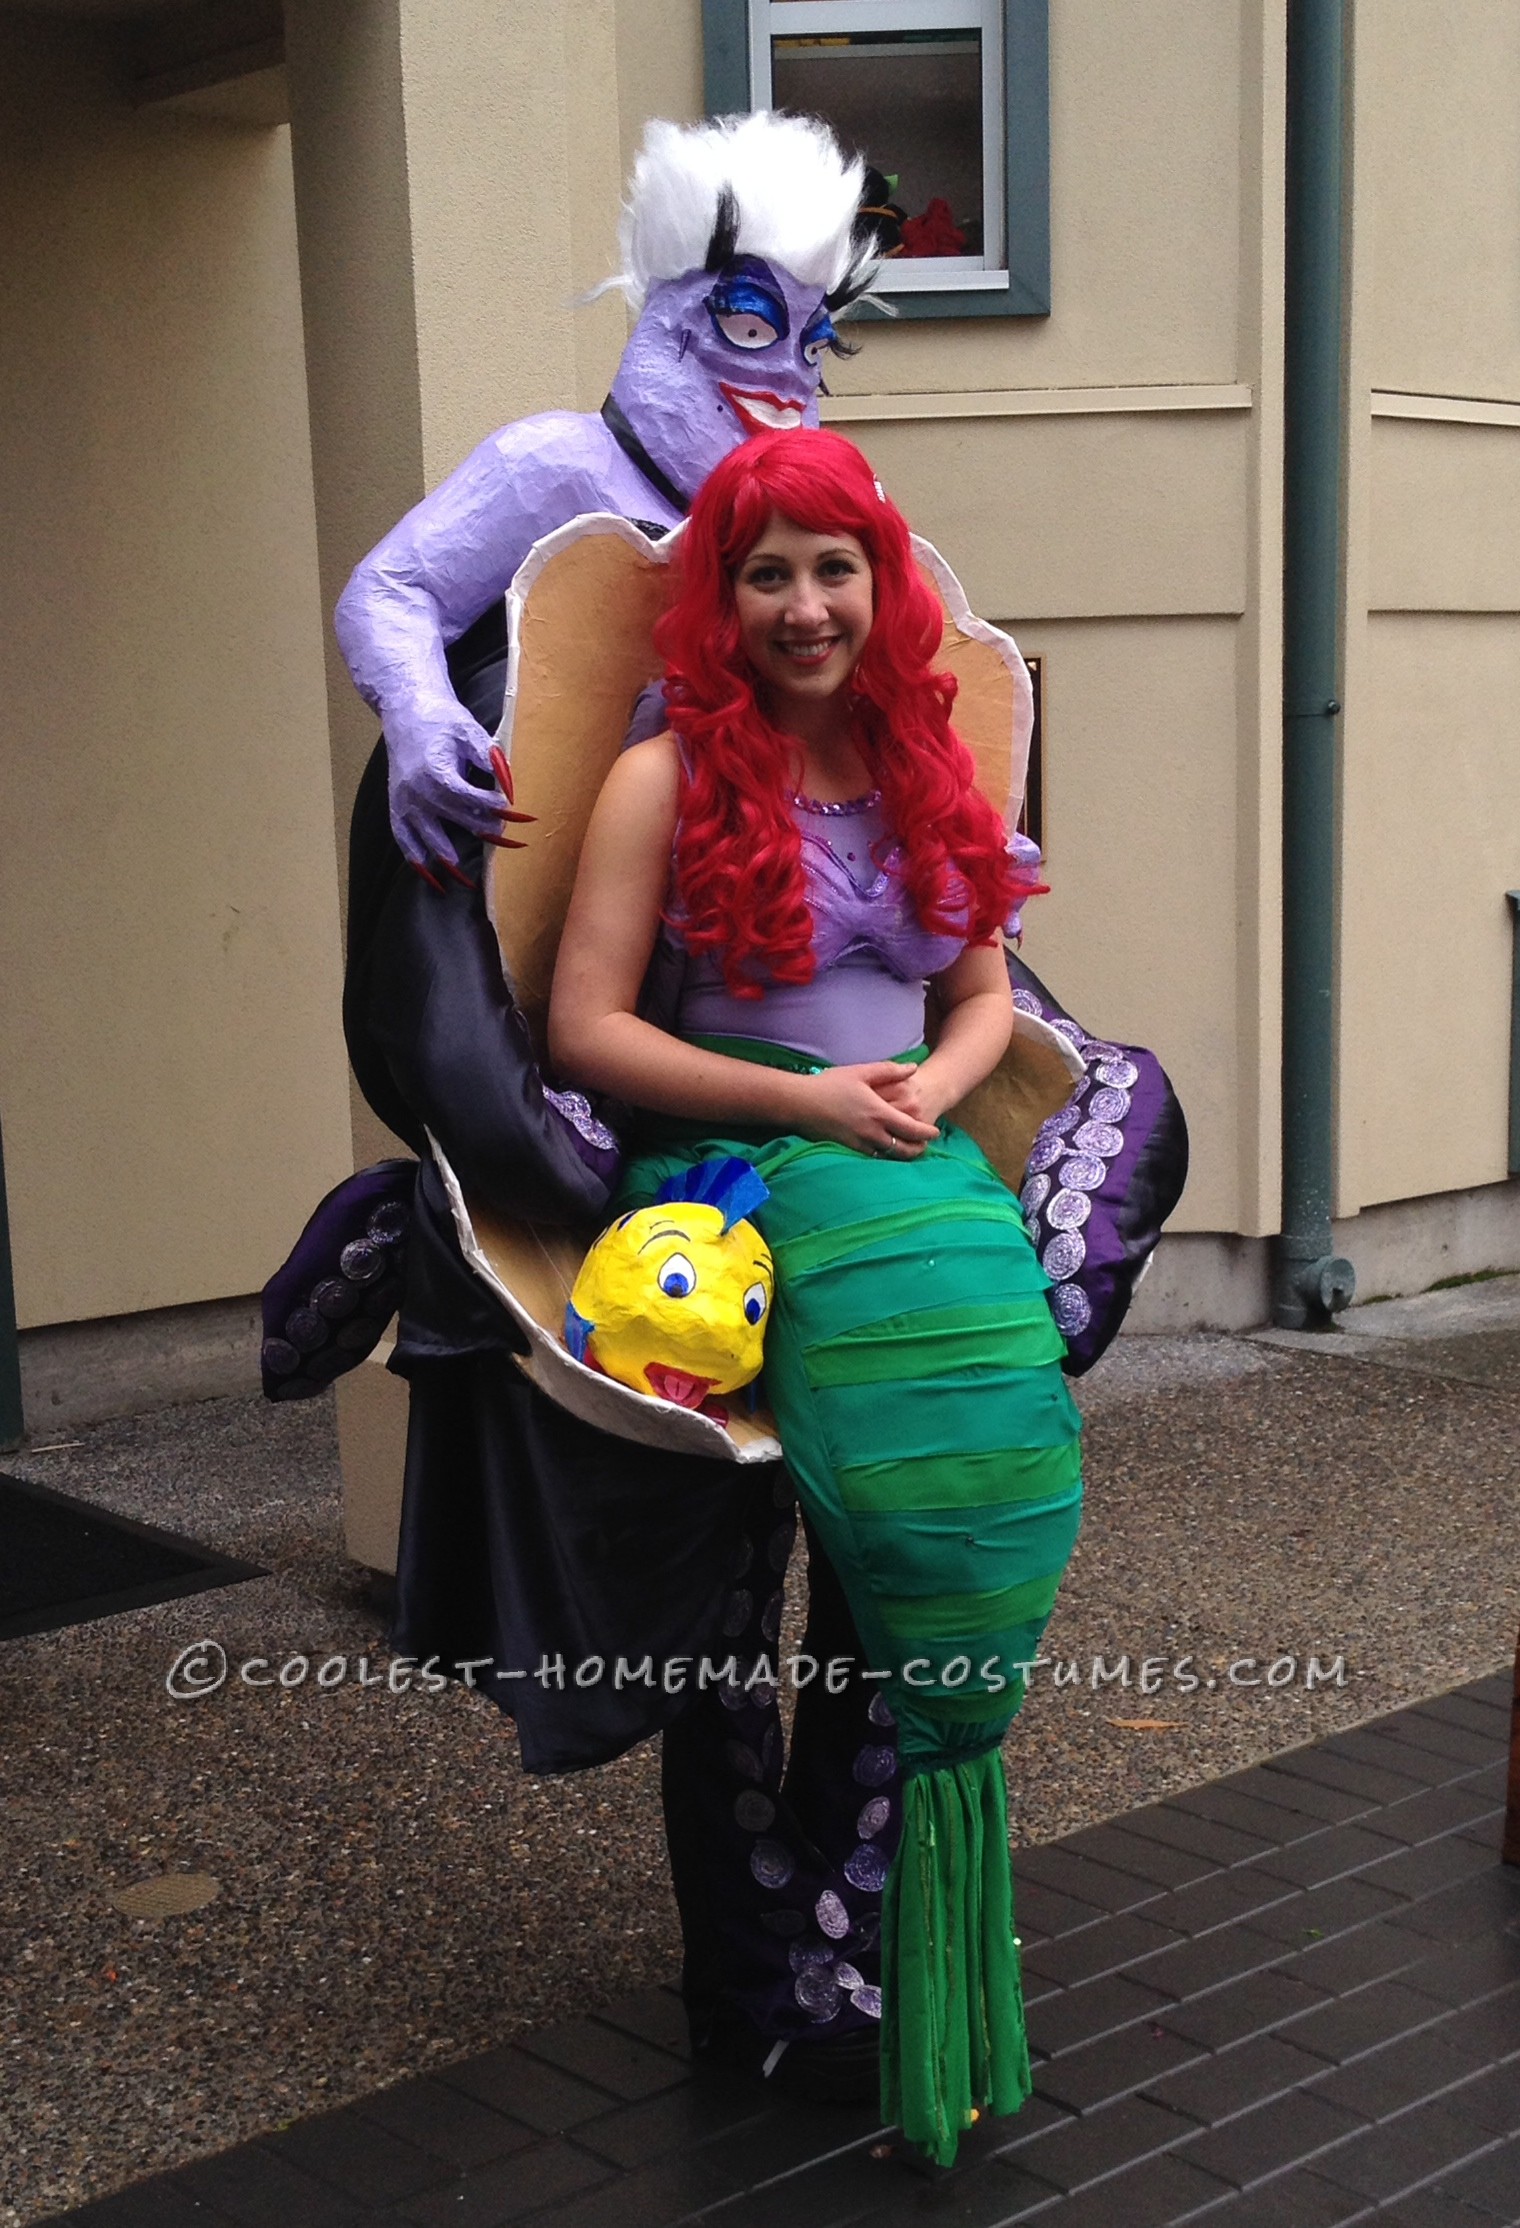 the little mermaid ursula costume